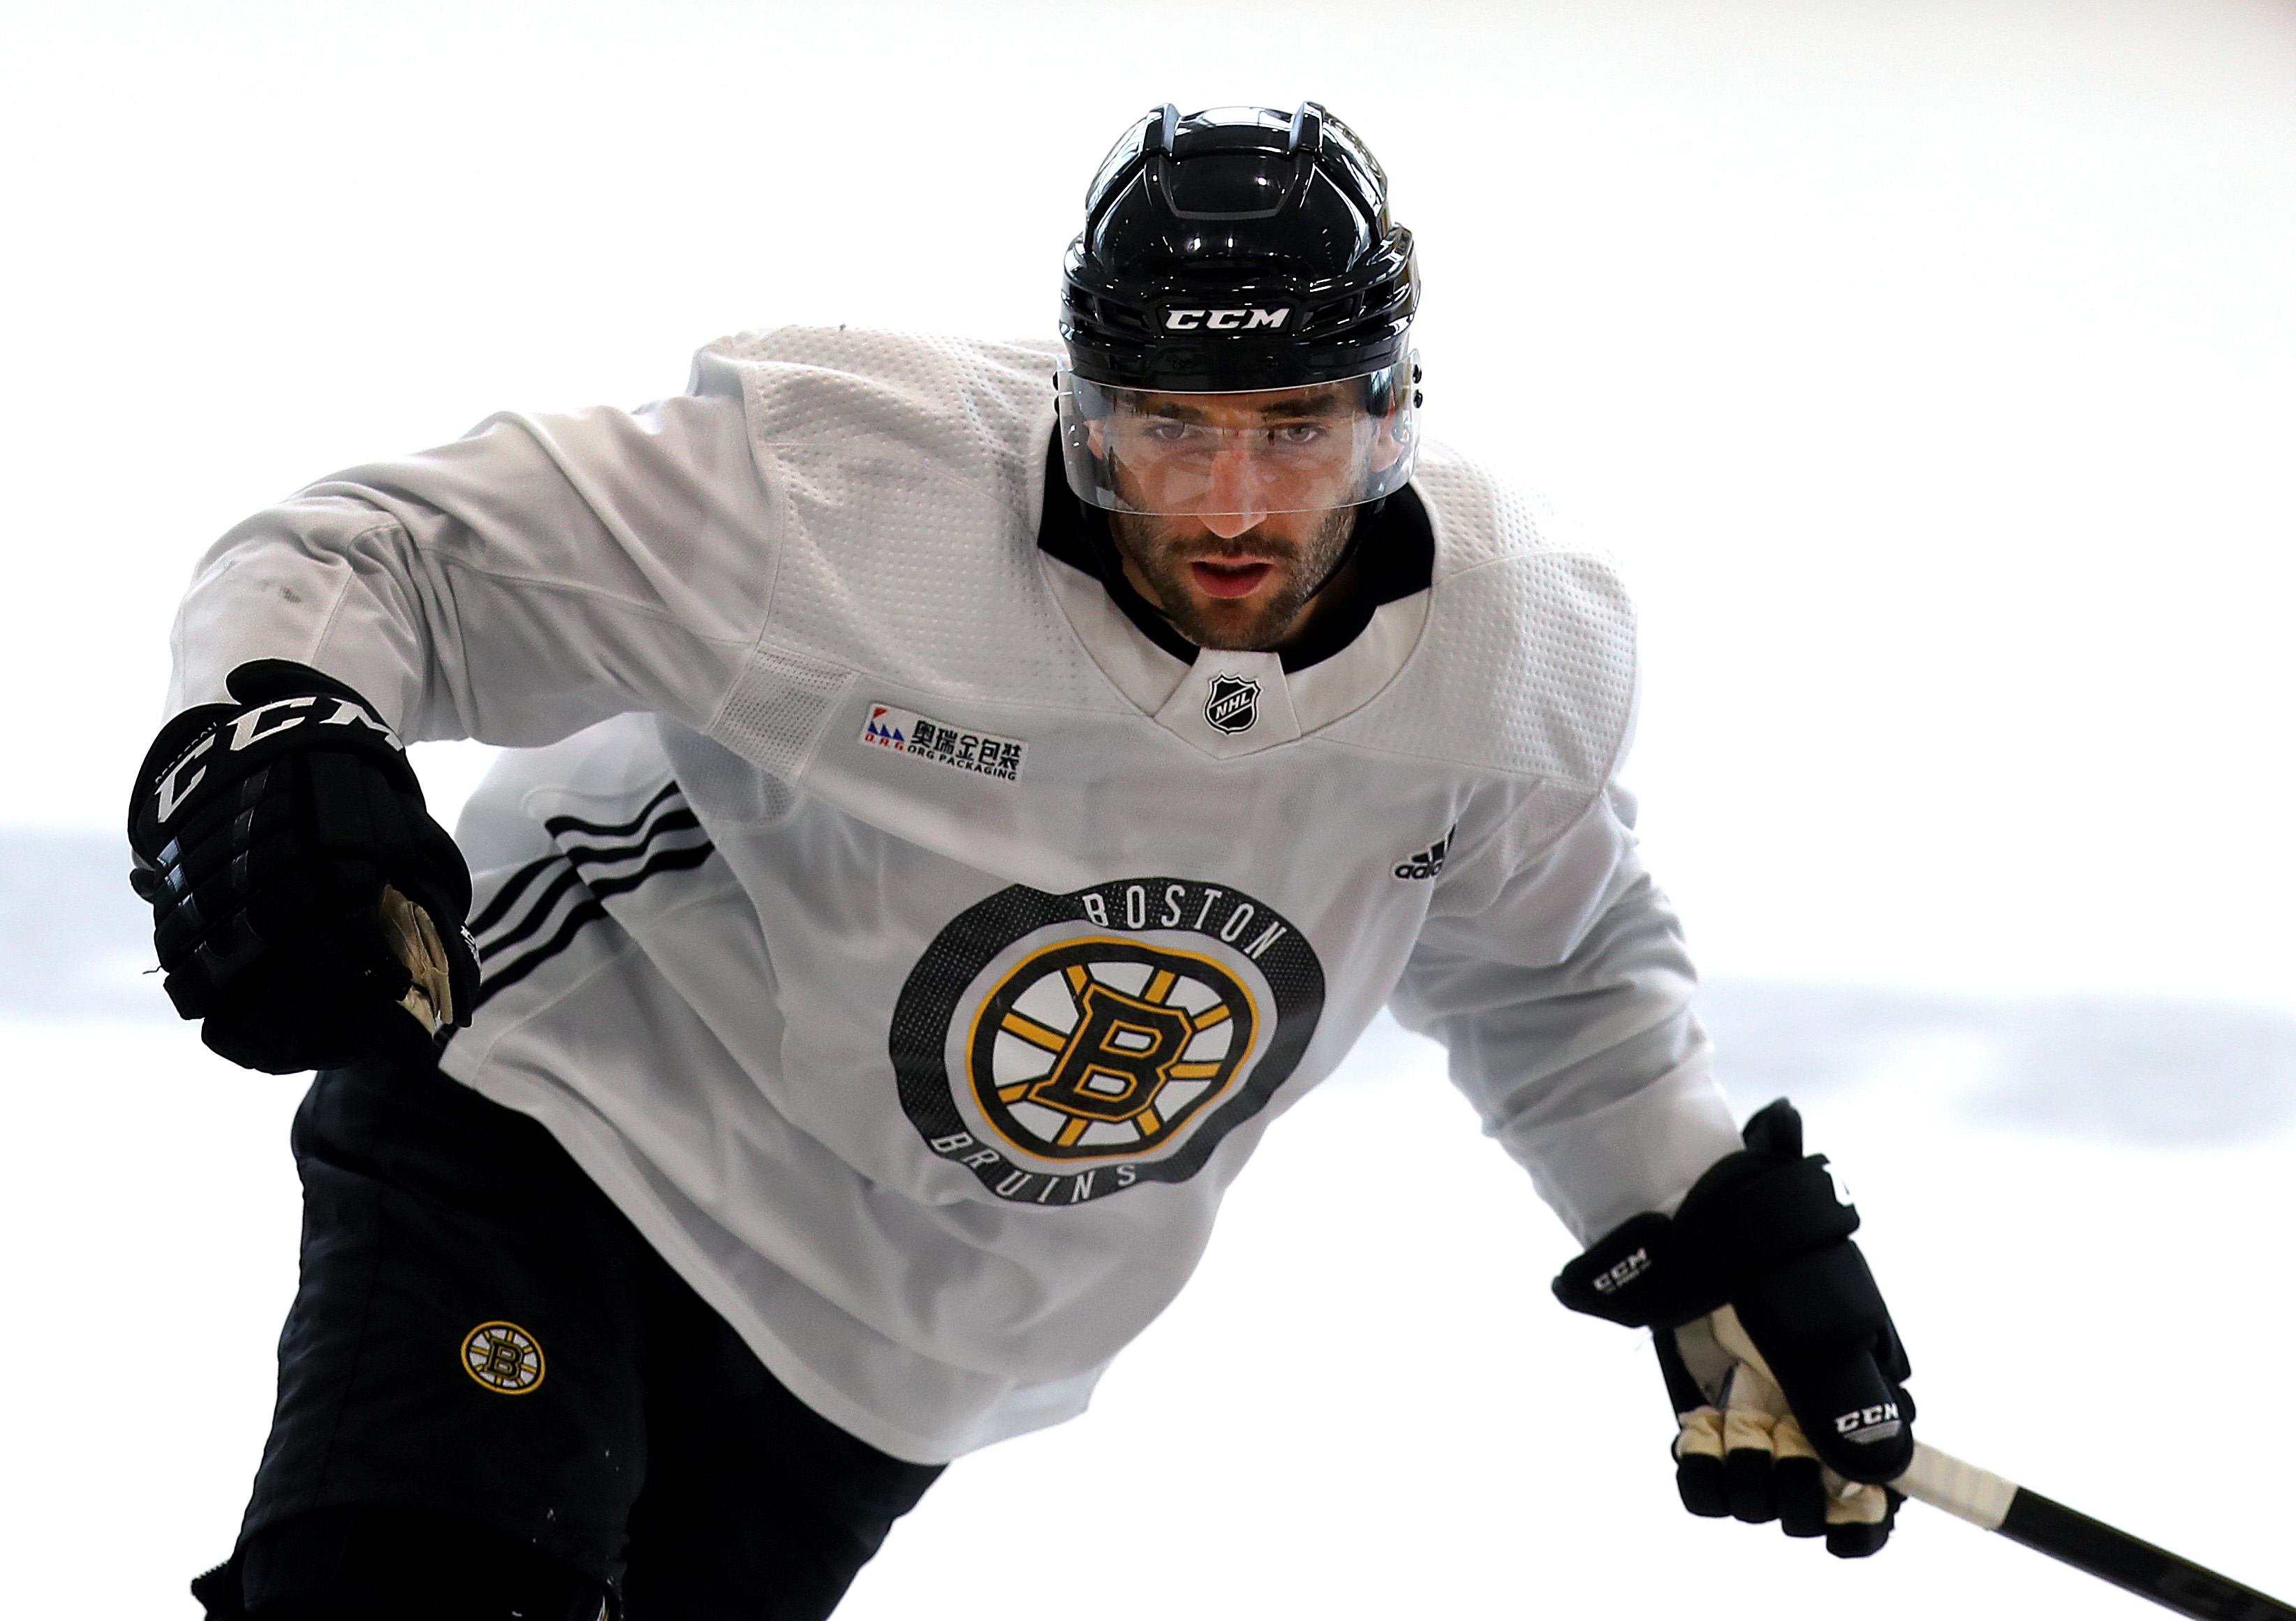 David Pastrnak Boston Bruins Autographed Gray 2020 NHL All-Star